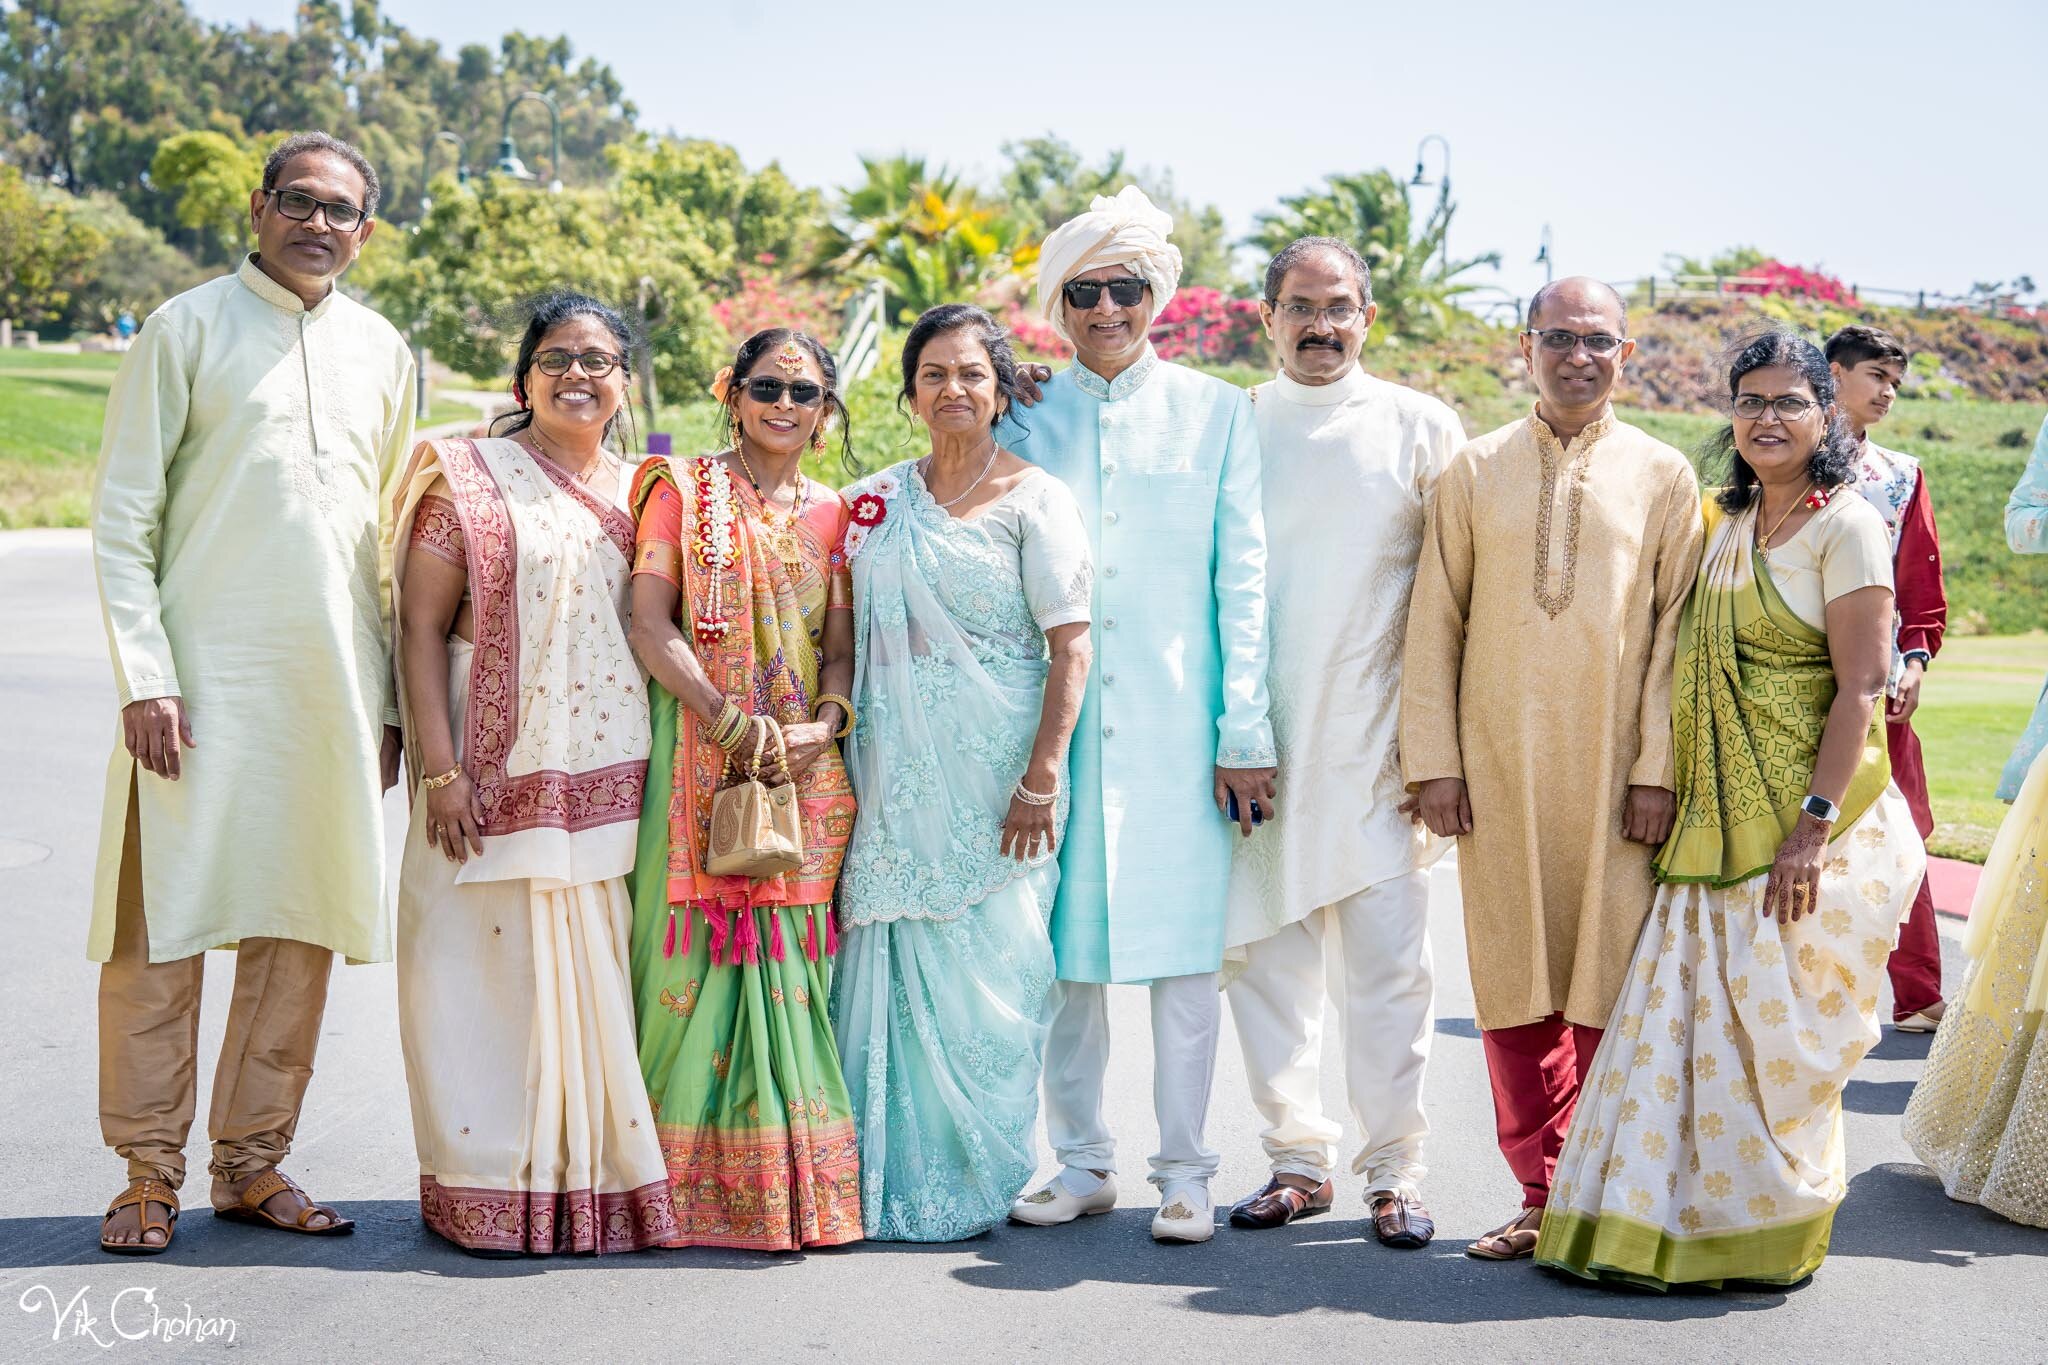 2021-07-30-Shaan-&-Megha-Wedding-Vik-Chohan-Photography-Photo-Booth-Social-Media-VCP-073.jpg